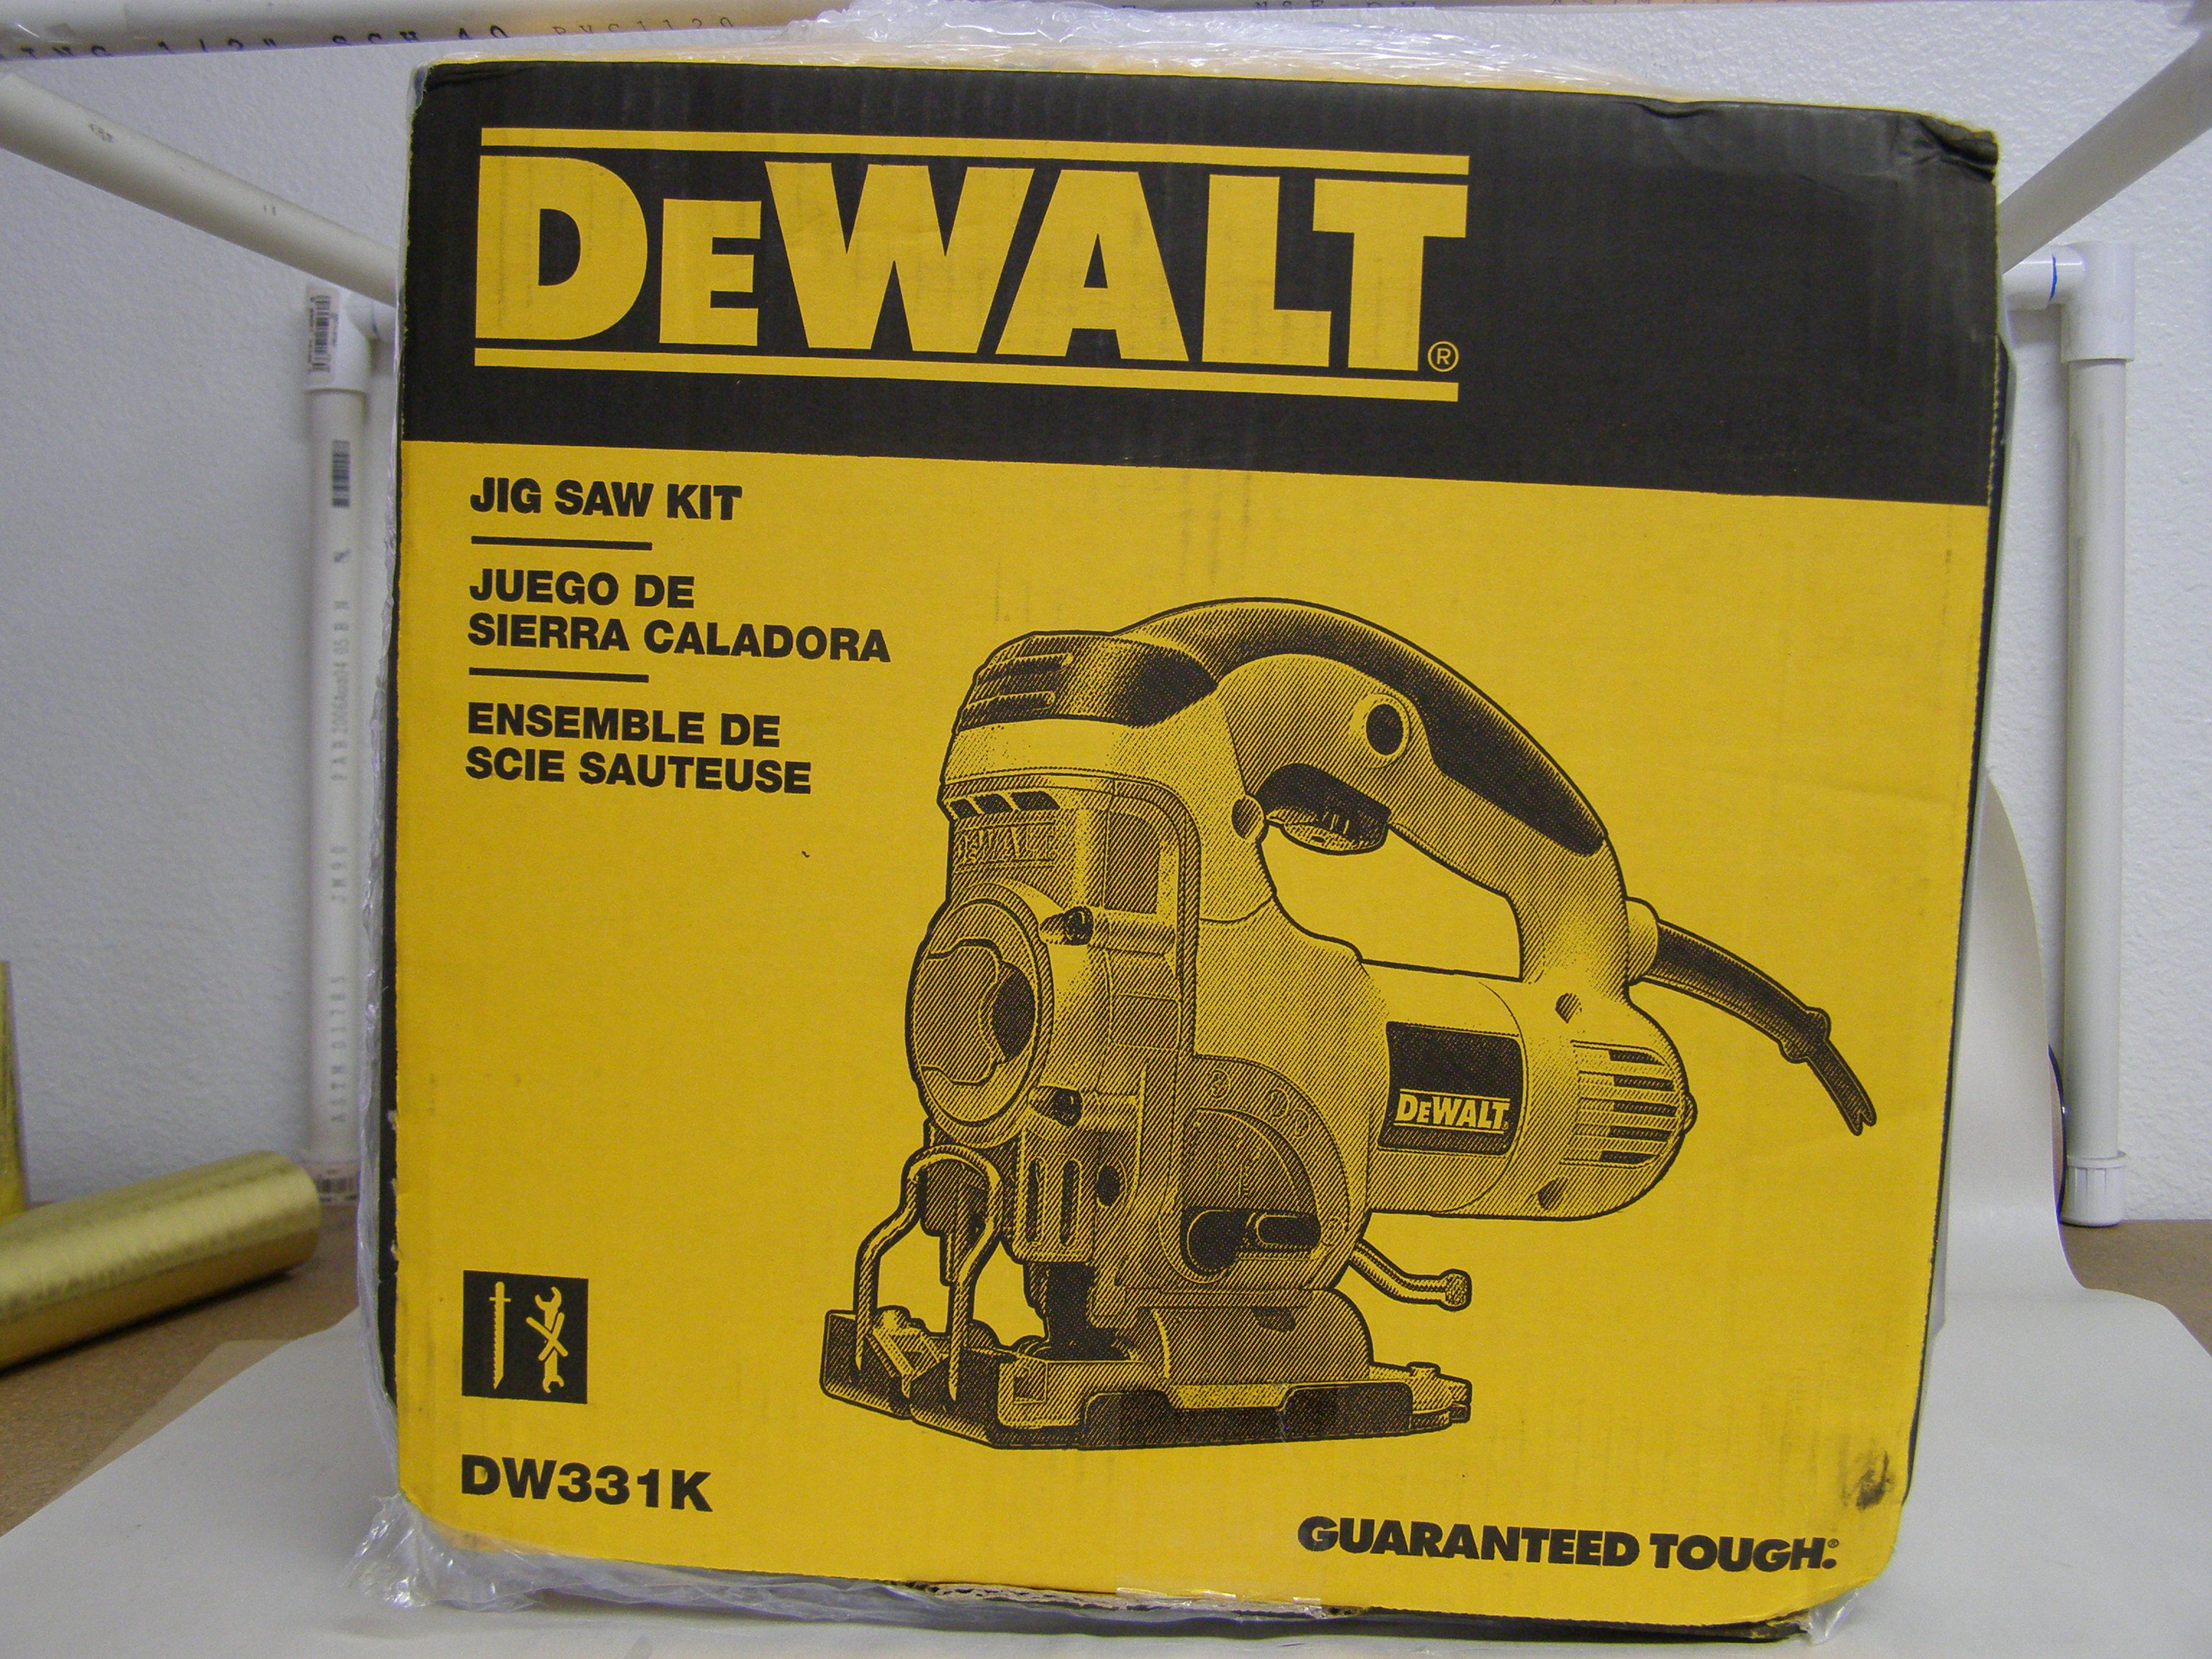 DeWalt DW331K Jig Saw Kit
DW331K